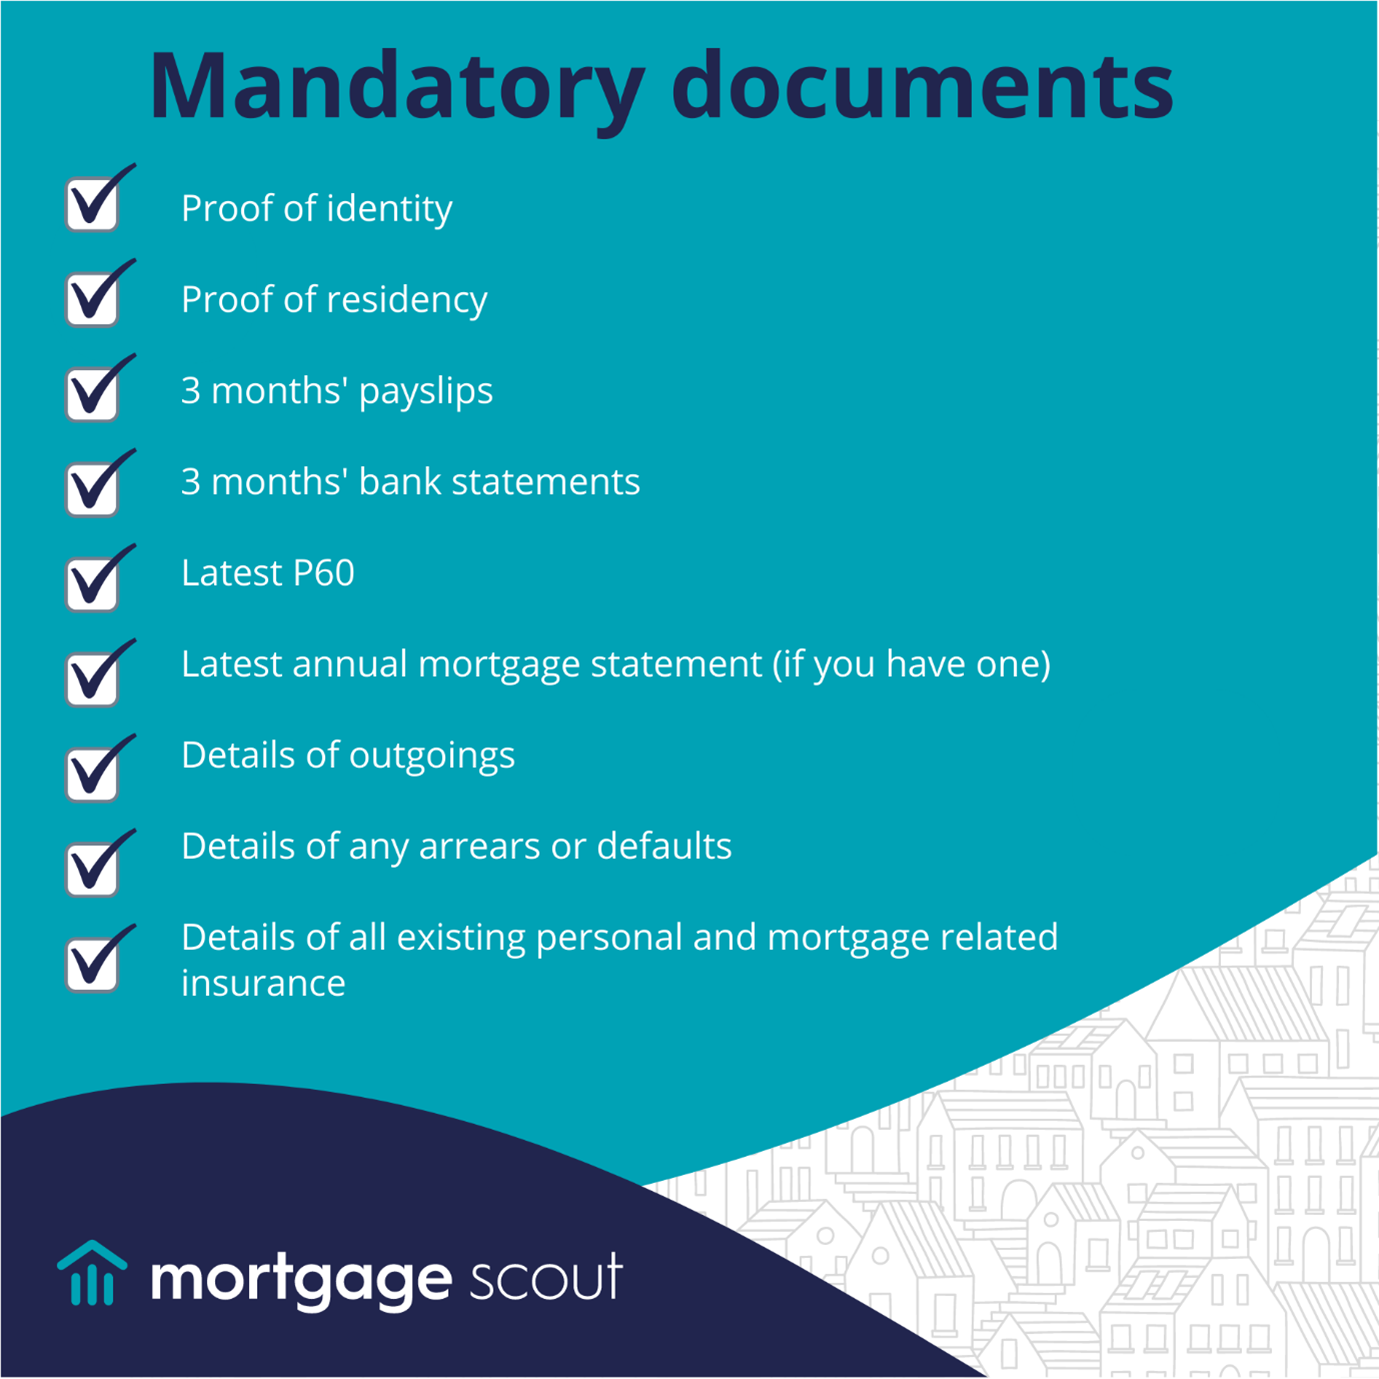 Mandatory documents